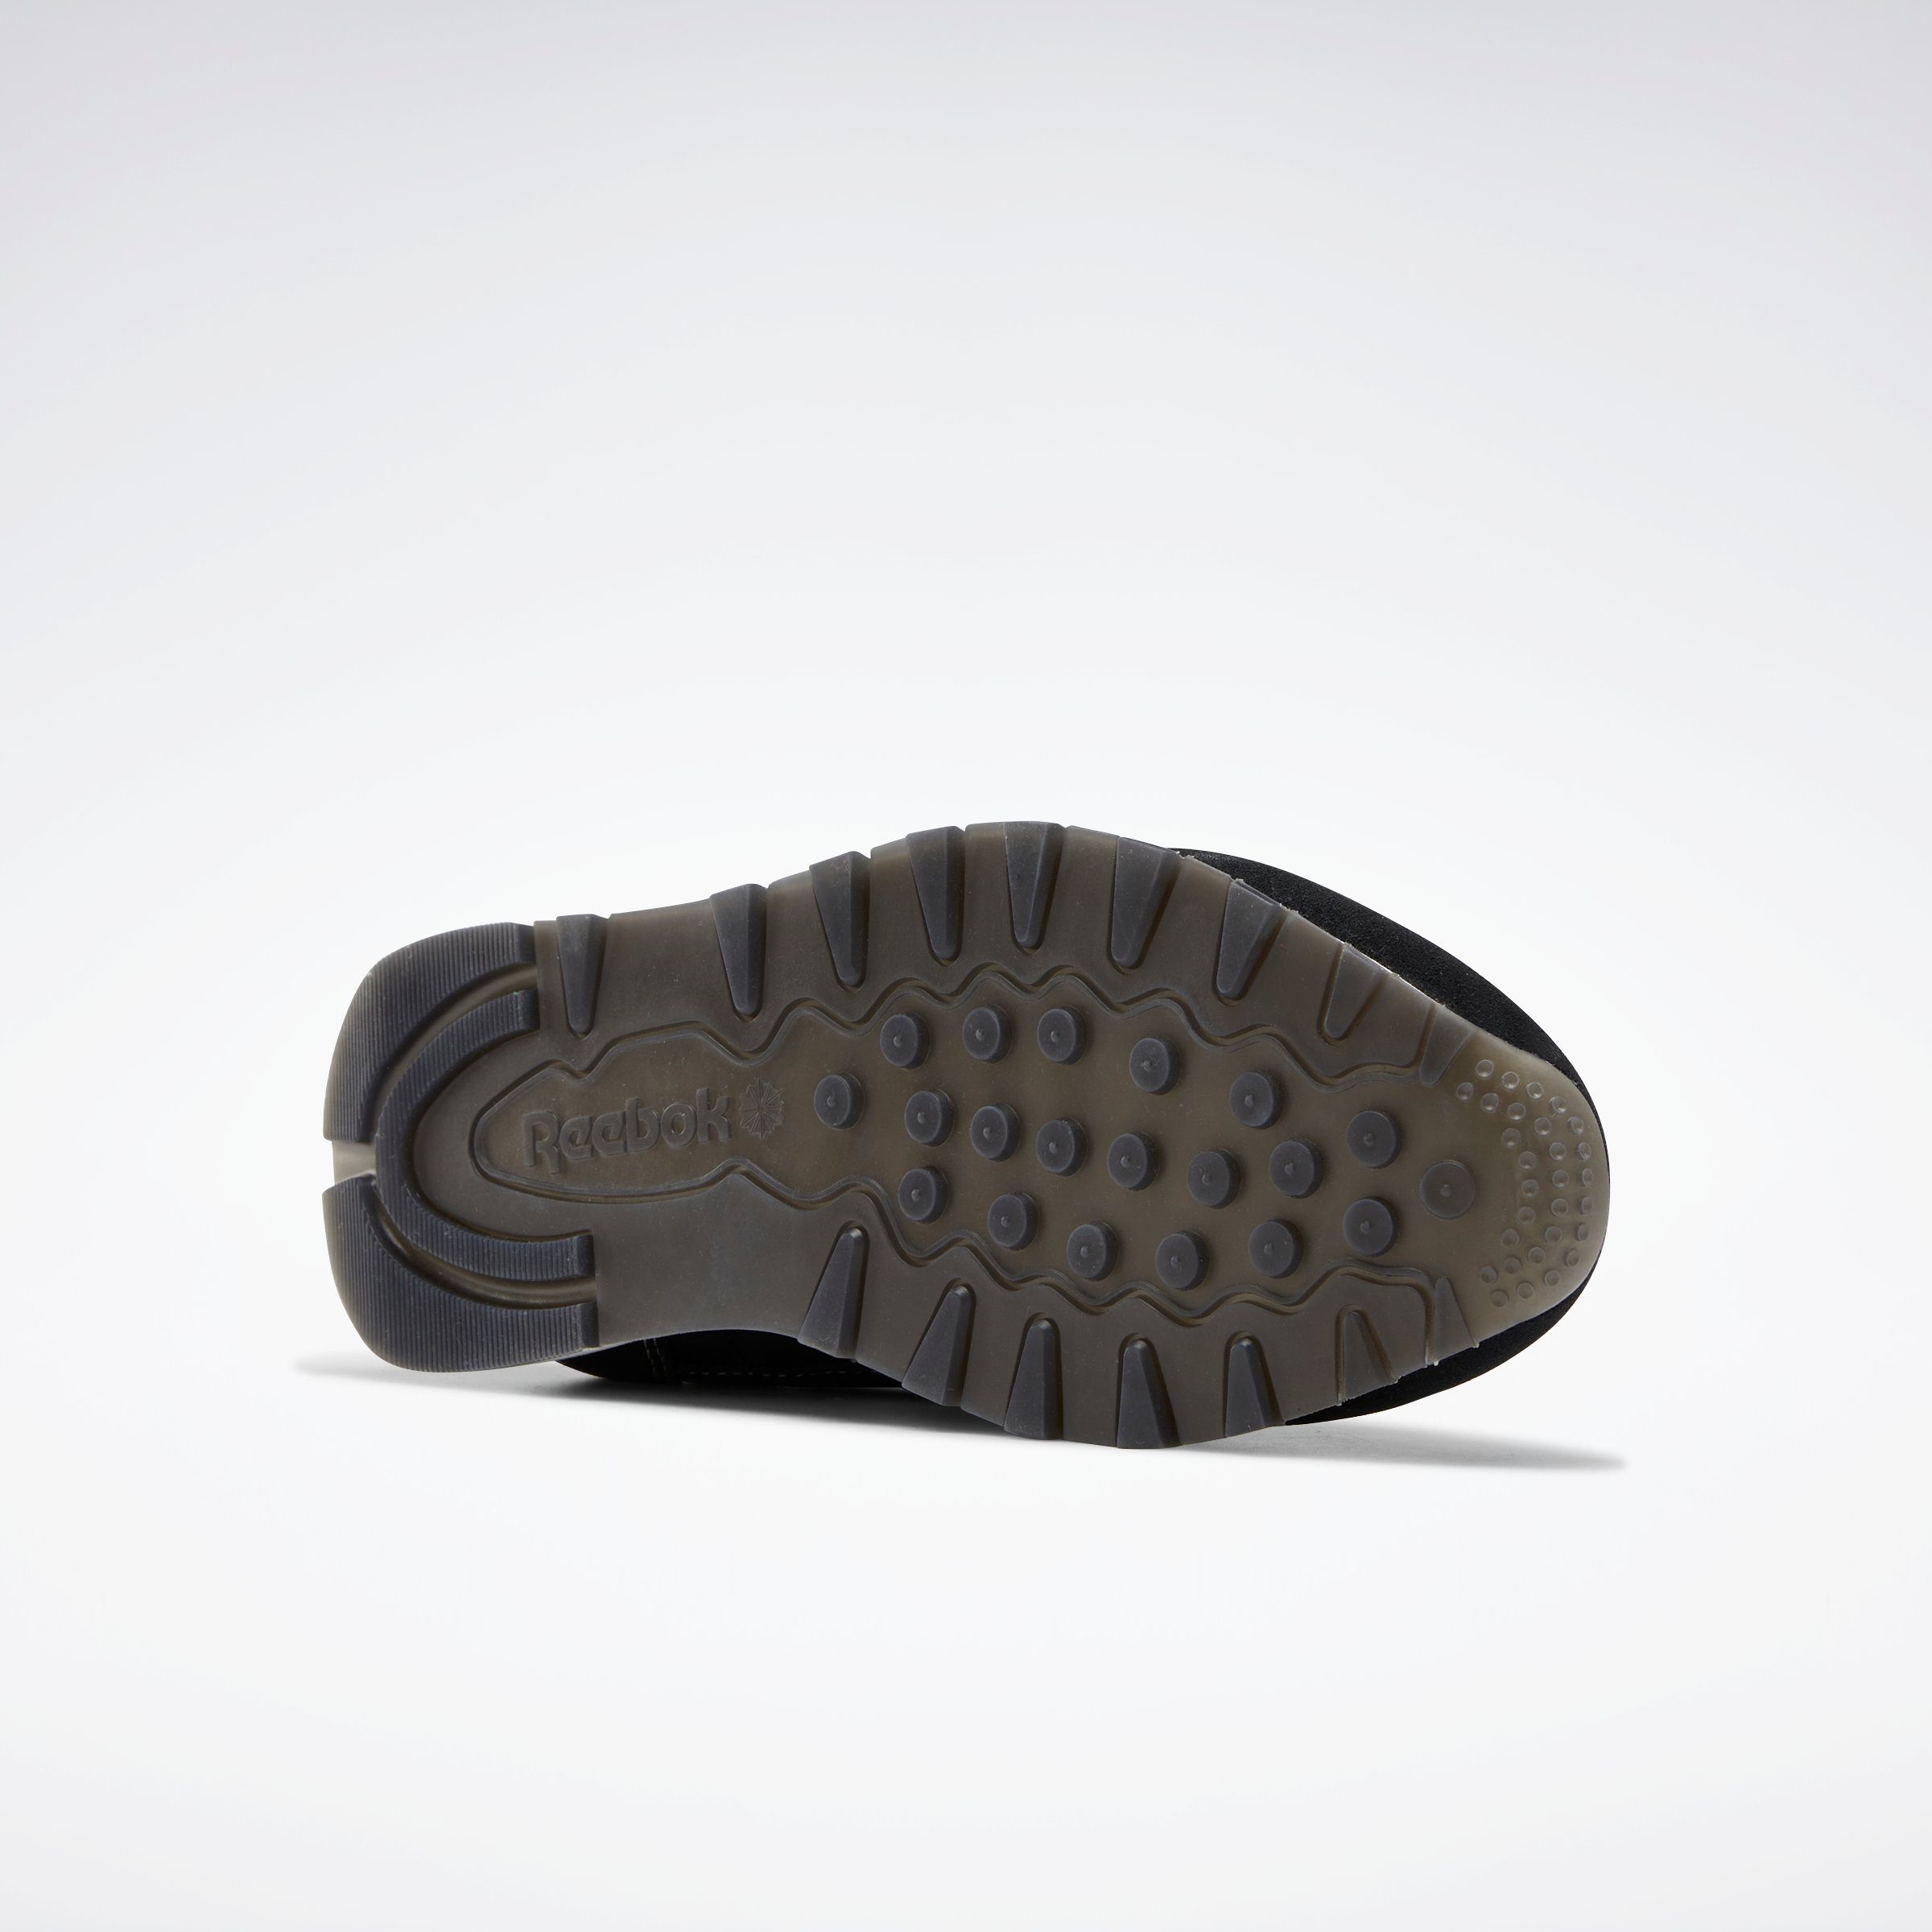 schwarz LEATHER Sneaker SHOES Reebok Classic CLASSIC